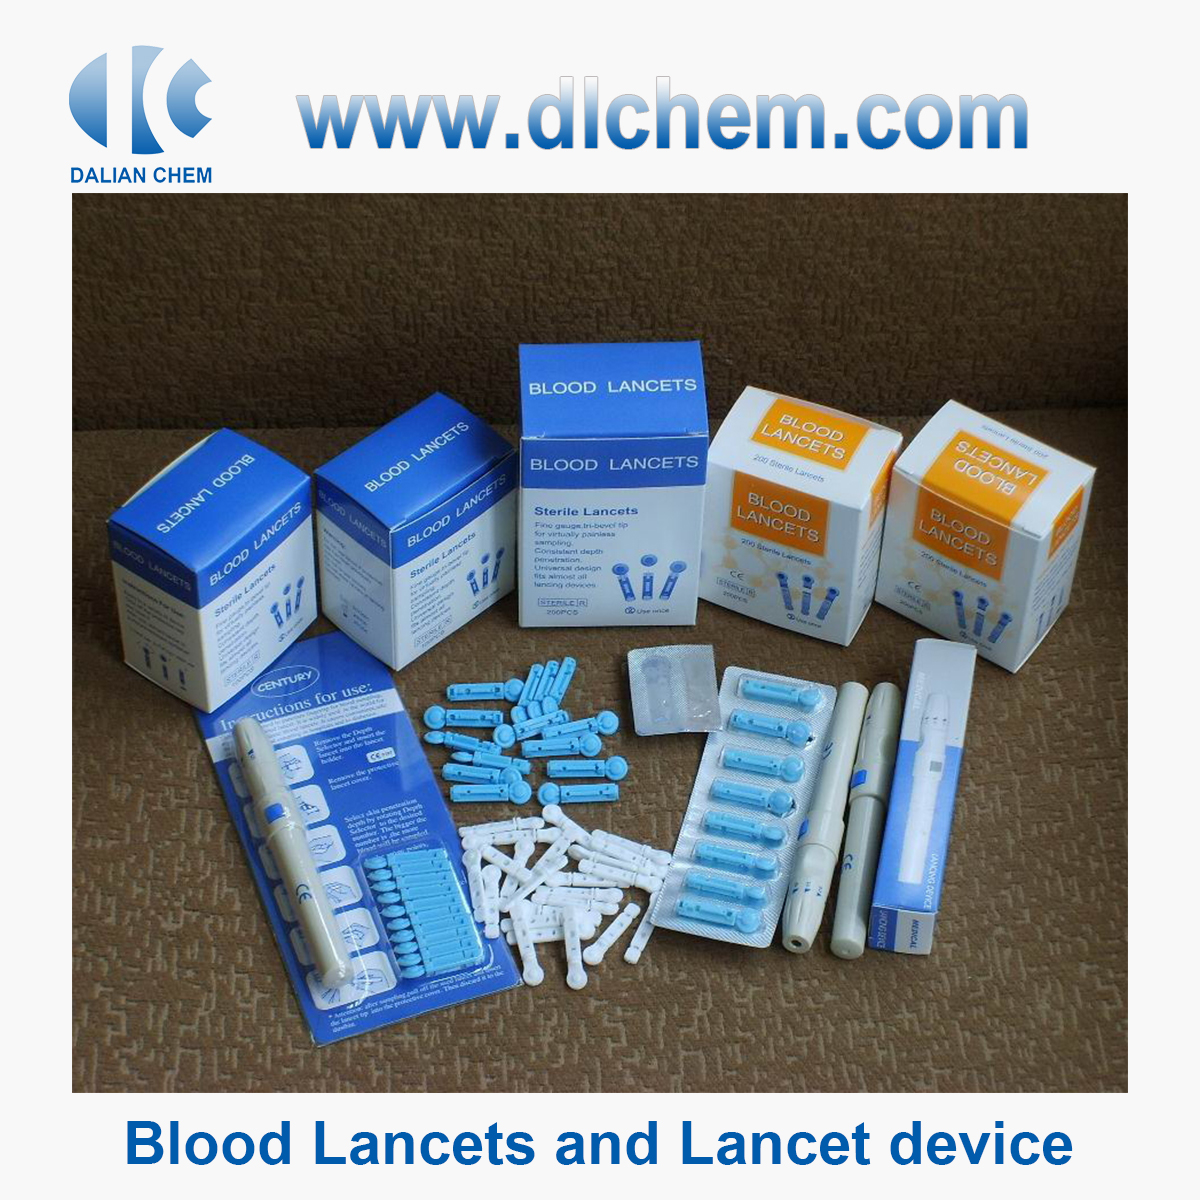 Blood Lancets and Lancet device